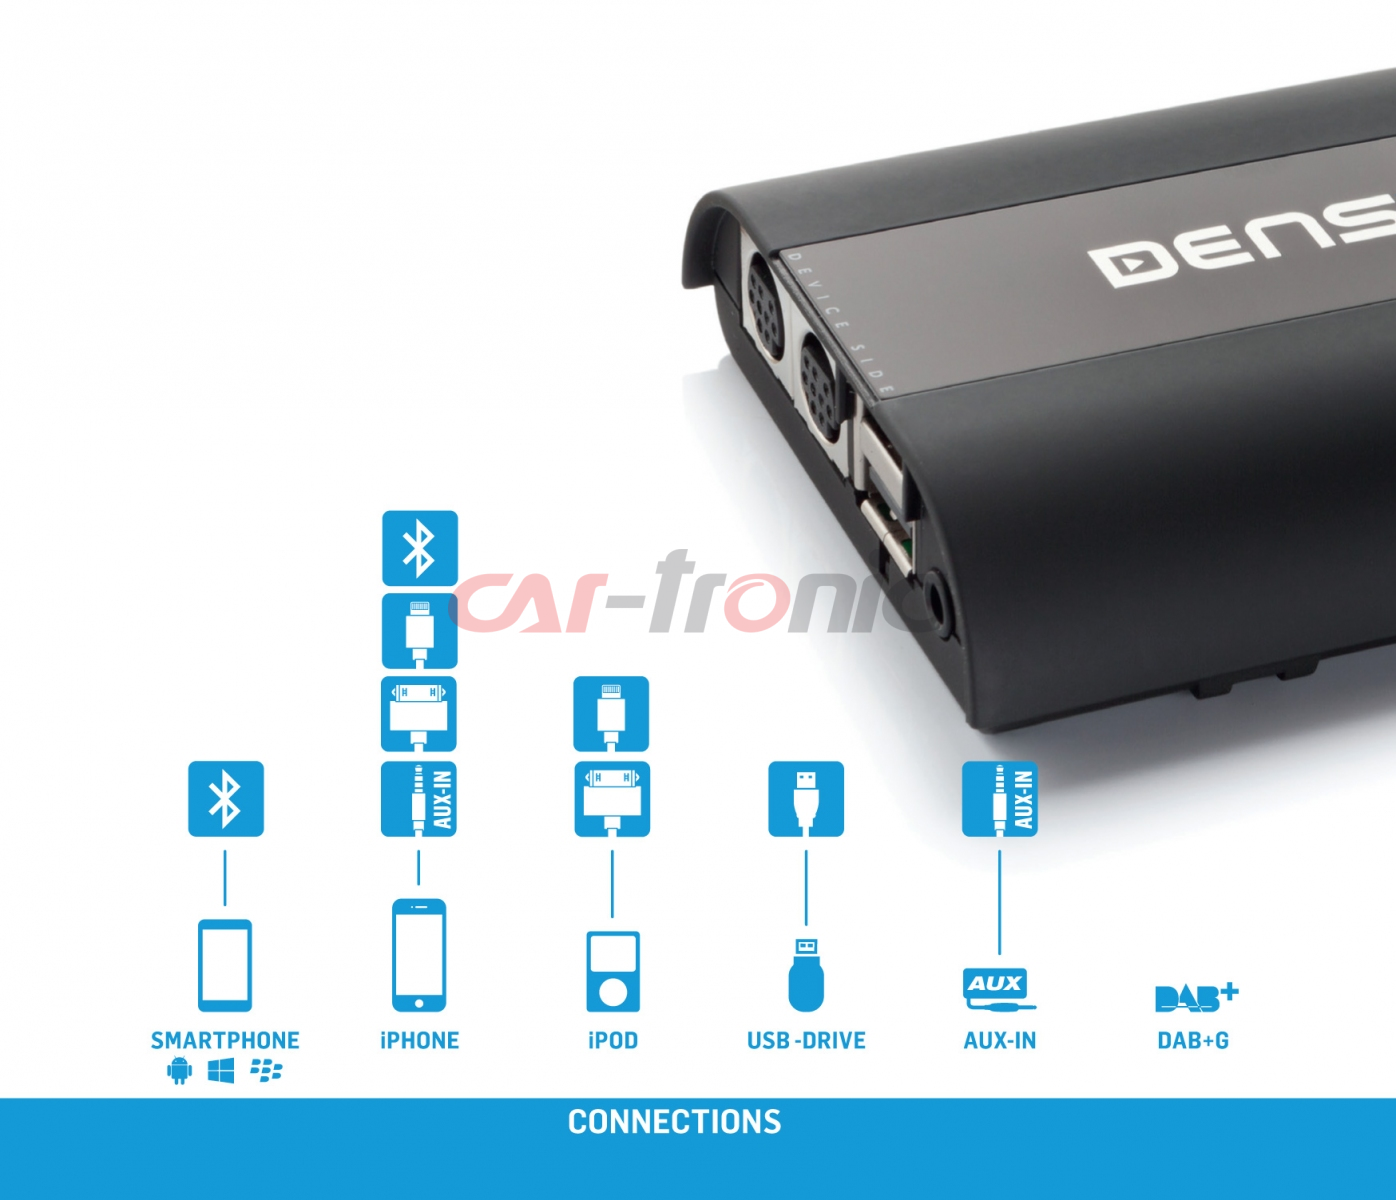 Dension Pro BT,AUX,USB,iPod,iPhone,ID3 - Citroen Peugeot